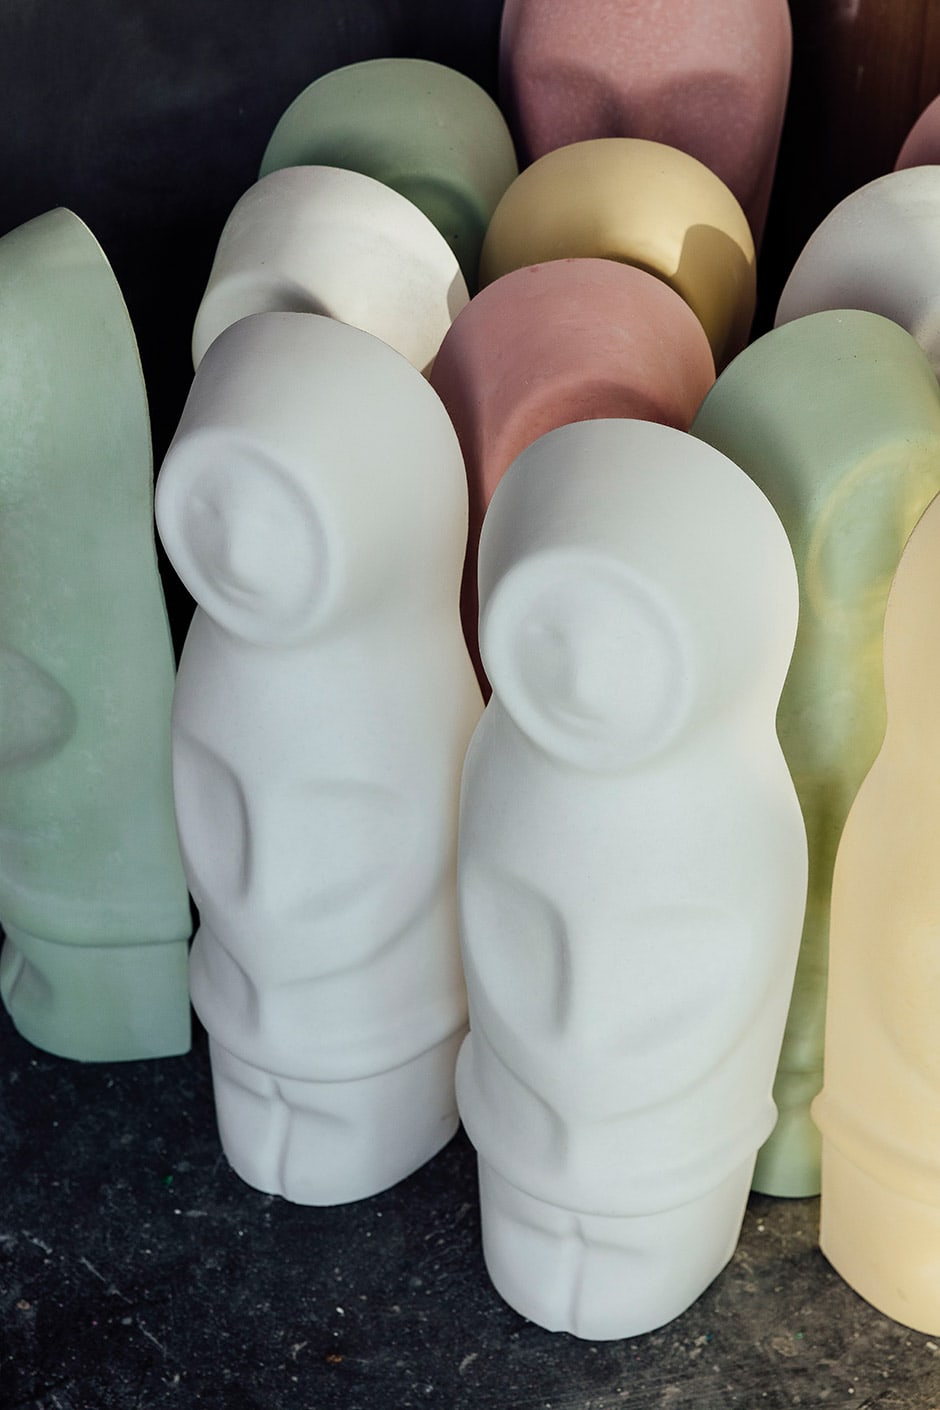 Ceramic candymen, glass jet planes and now wax-cast licorice? Go Simon Lewis Wards